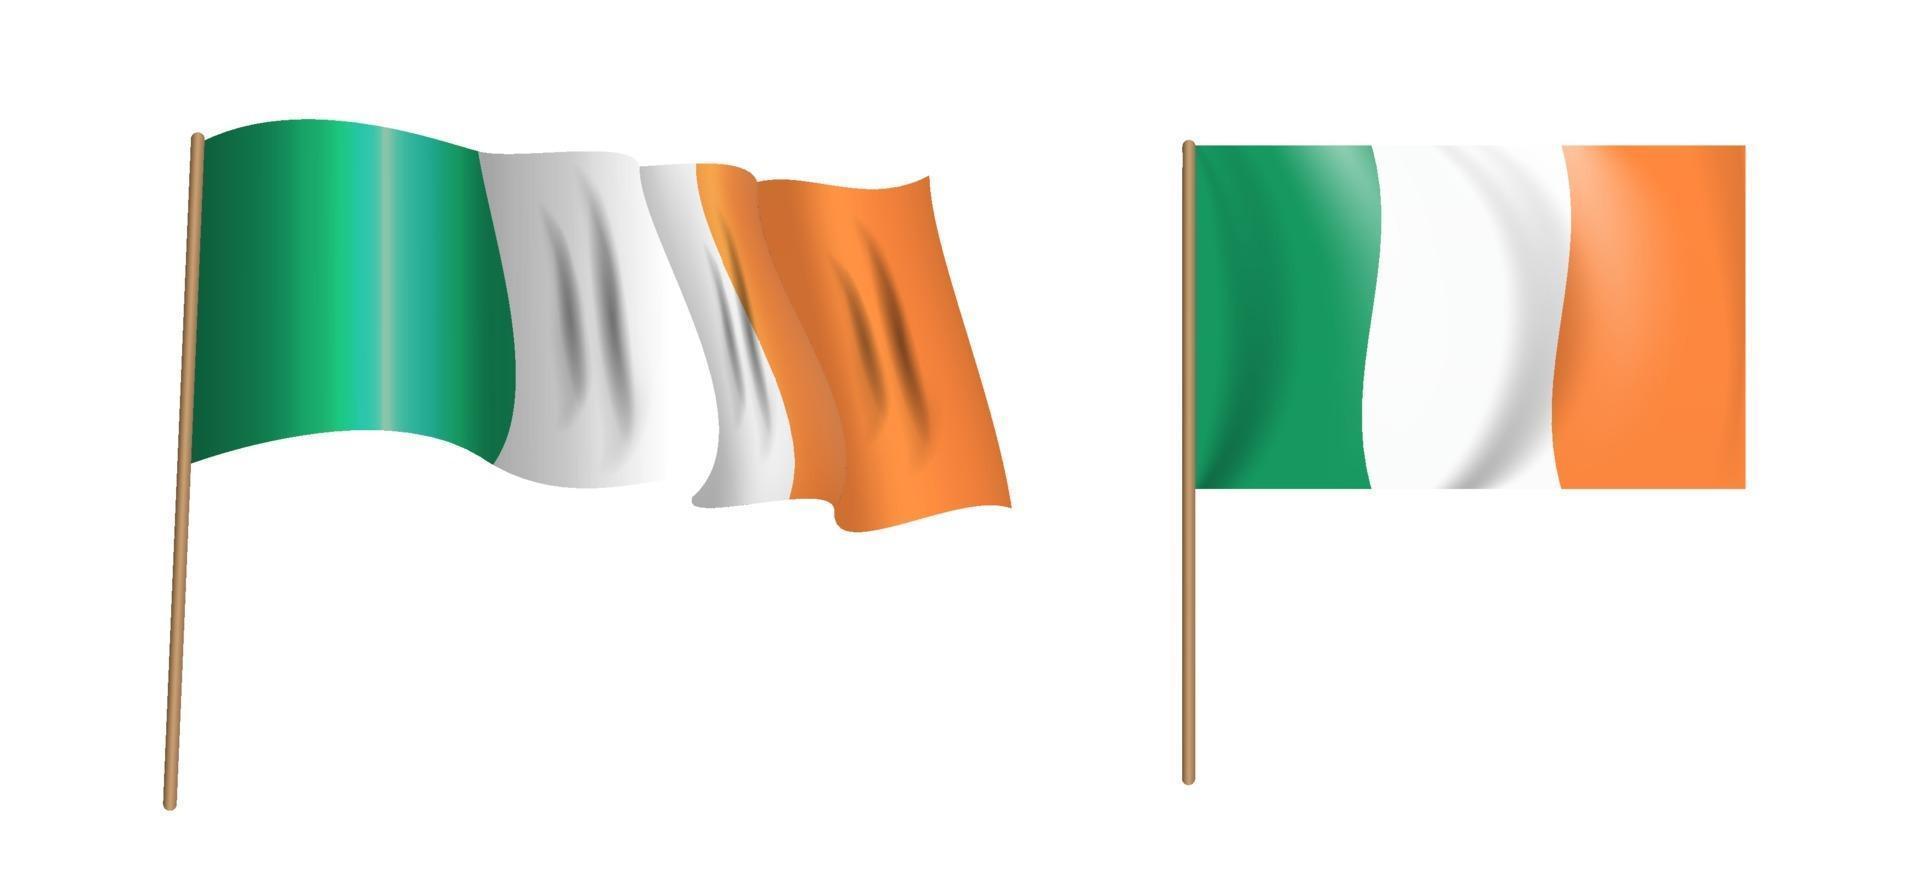 Ireland's colorful, naturalistic Ireland waving flag. vector